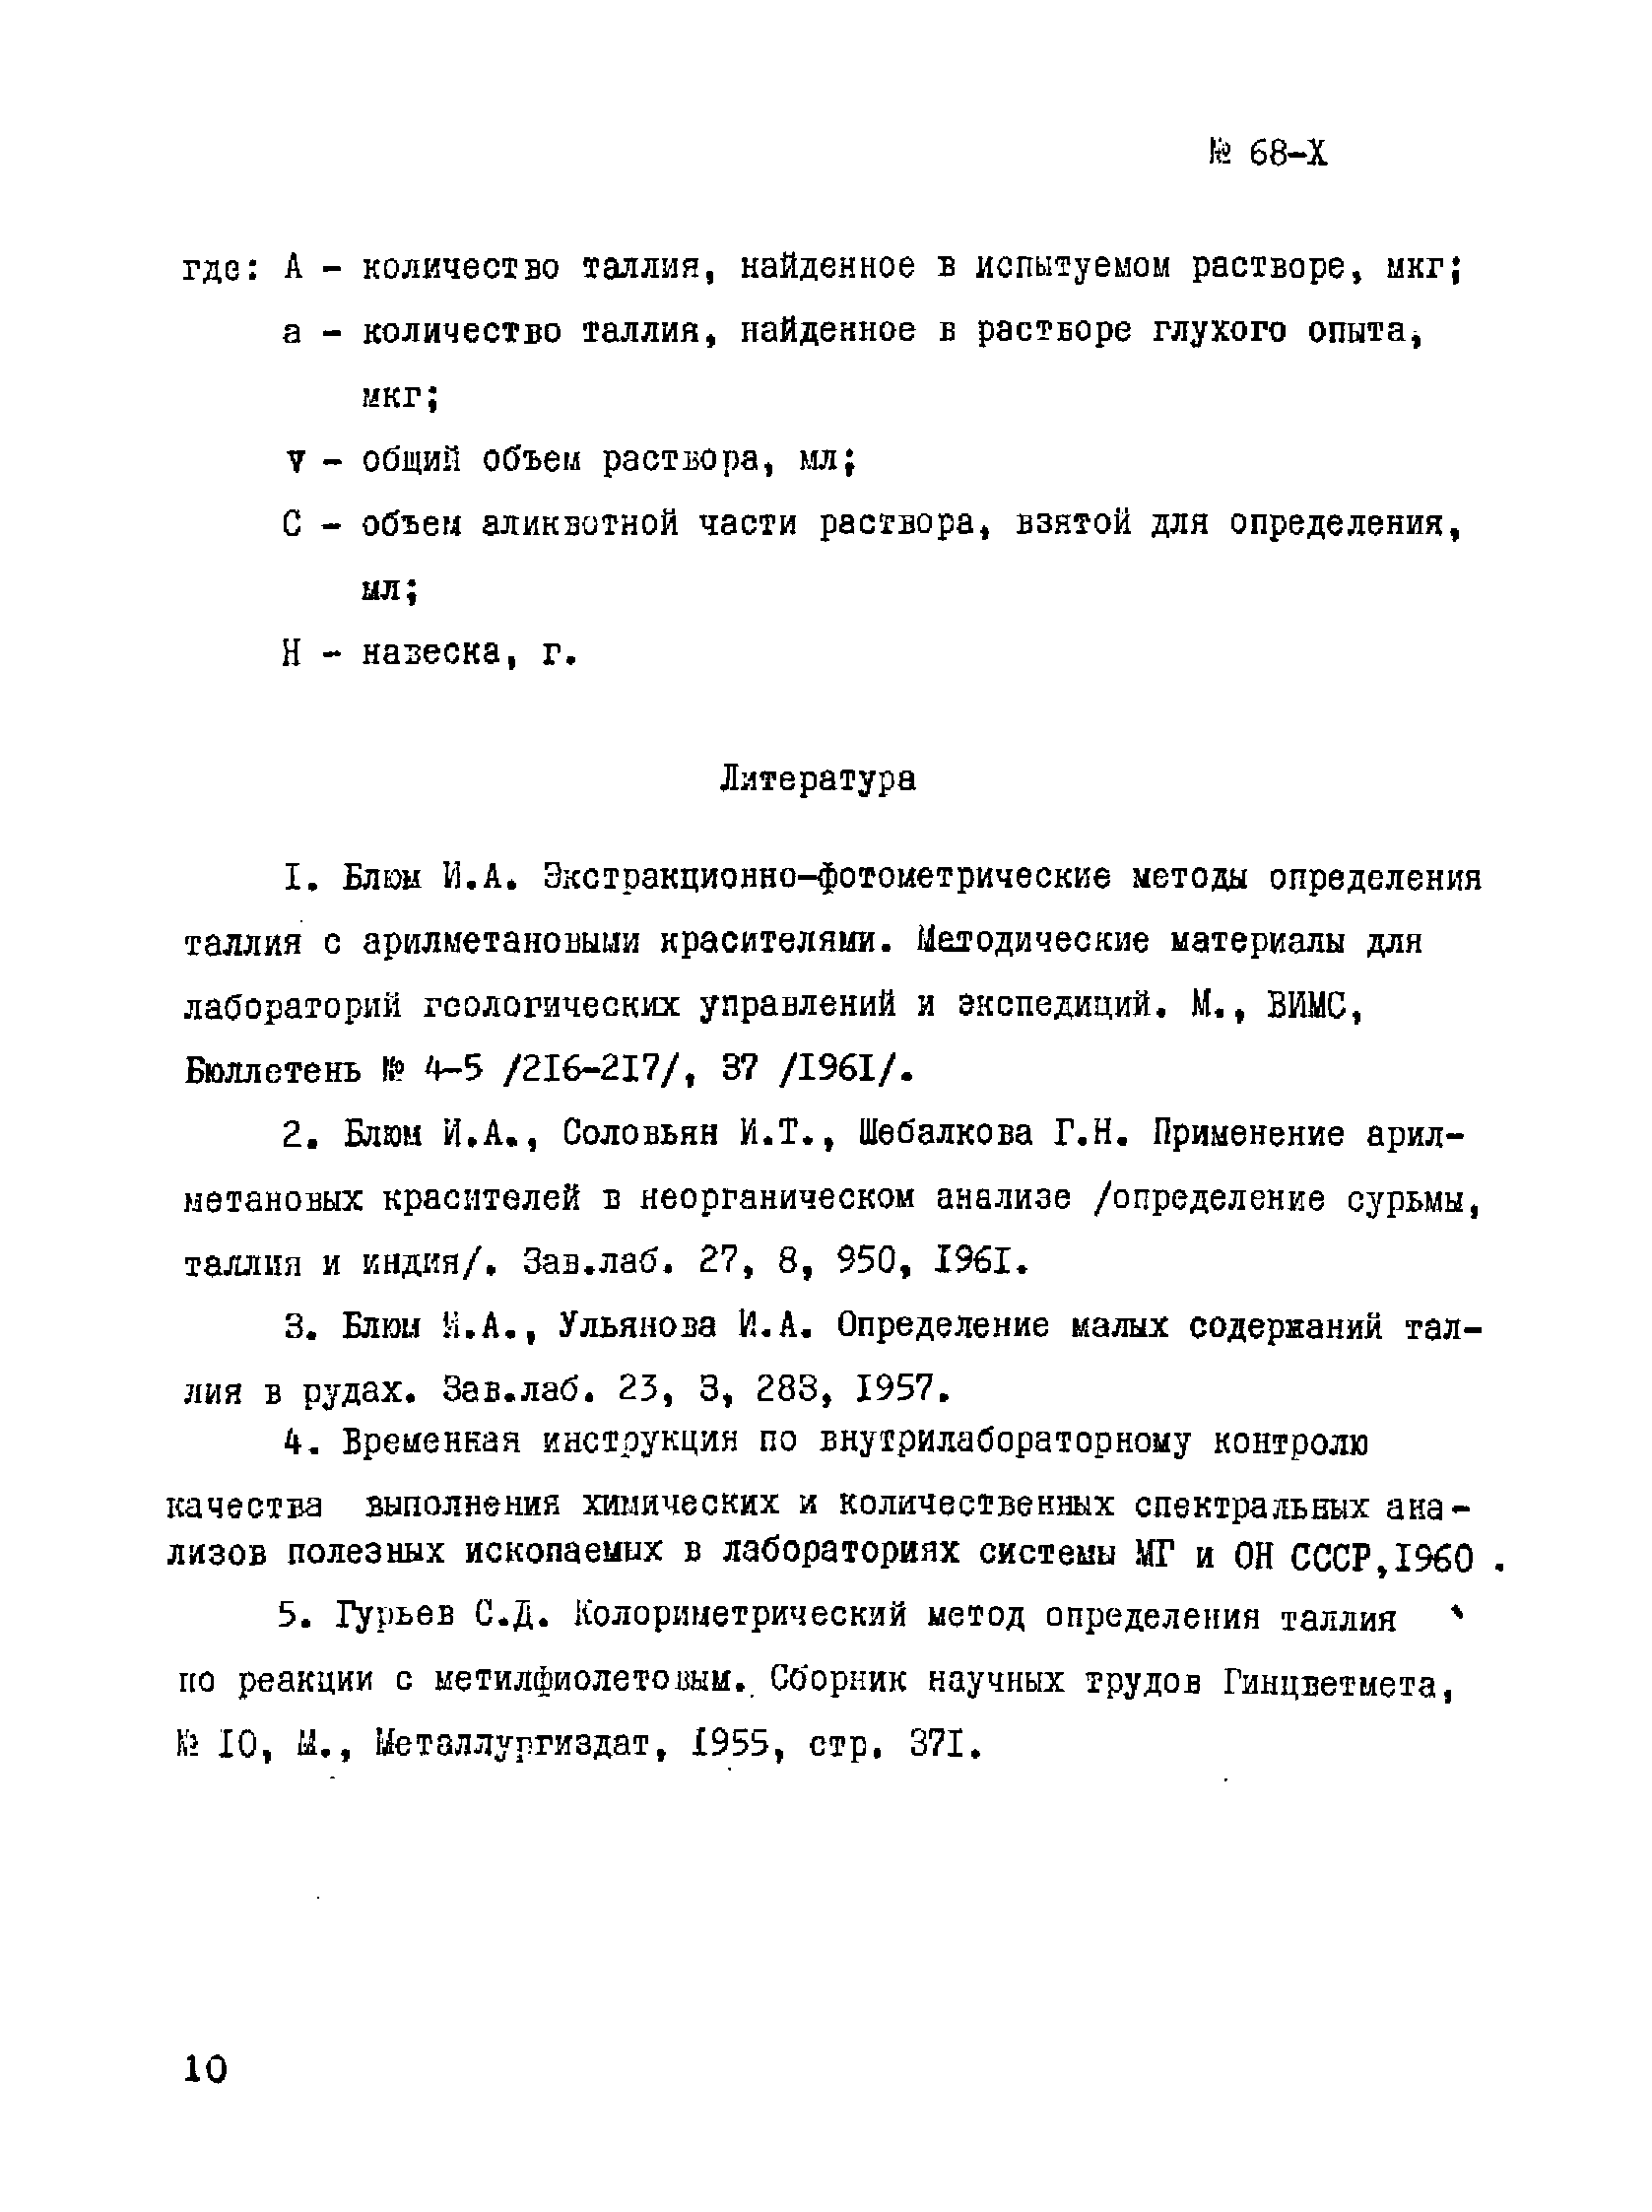 Инструкция НСАМ 68-Х